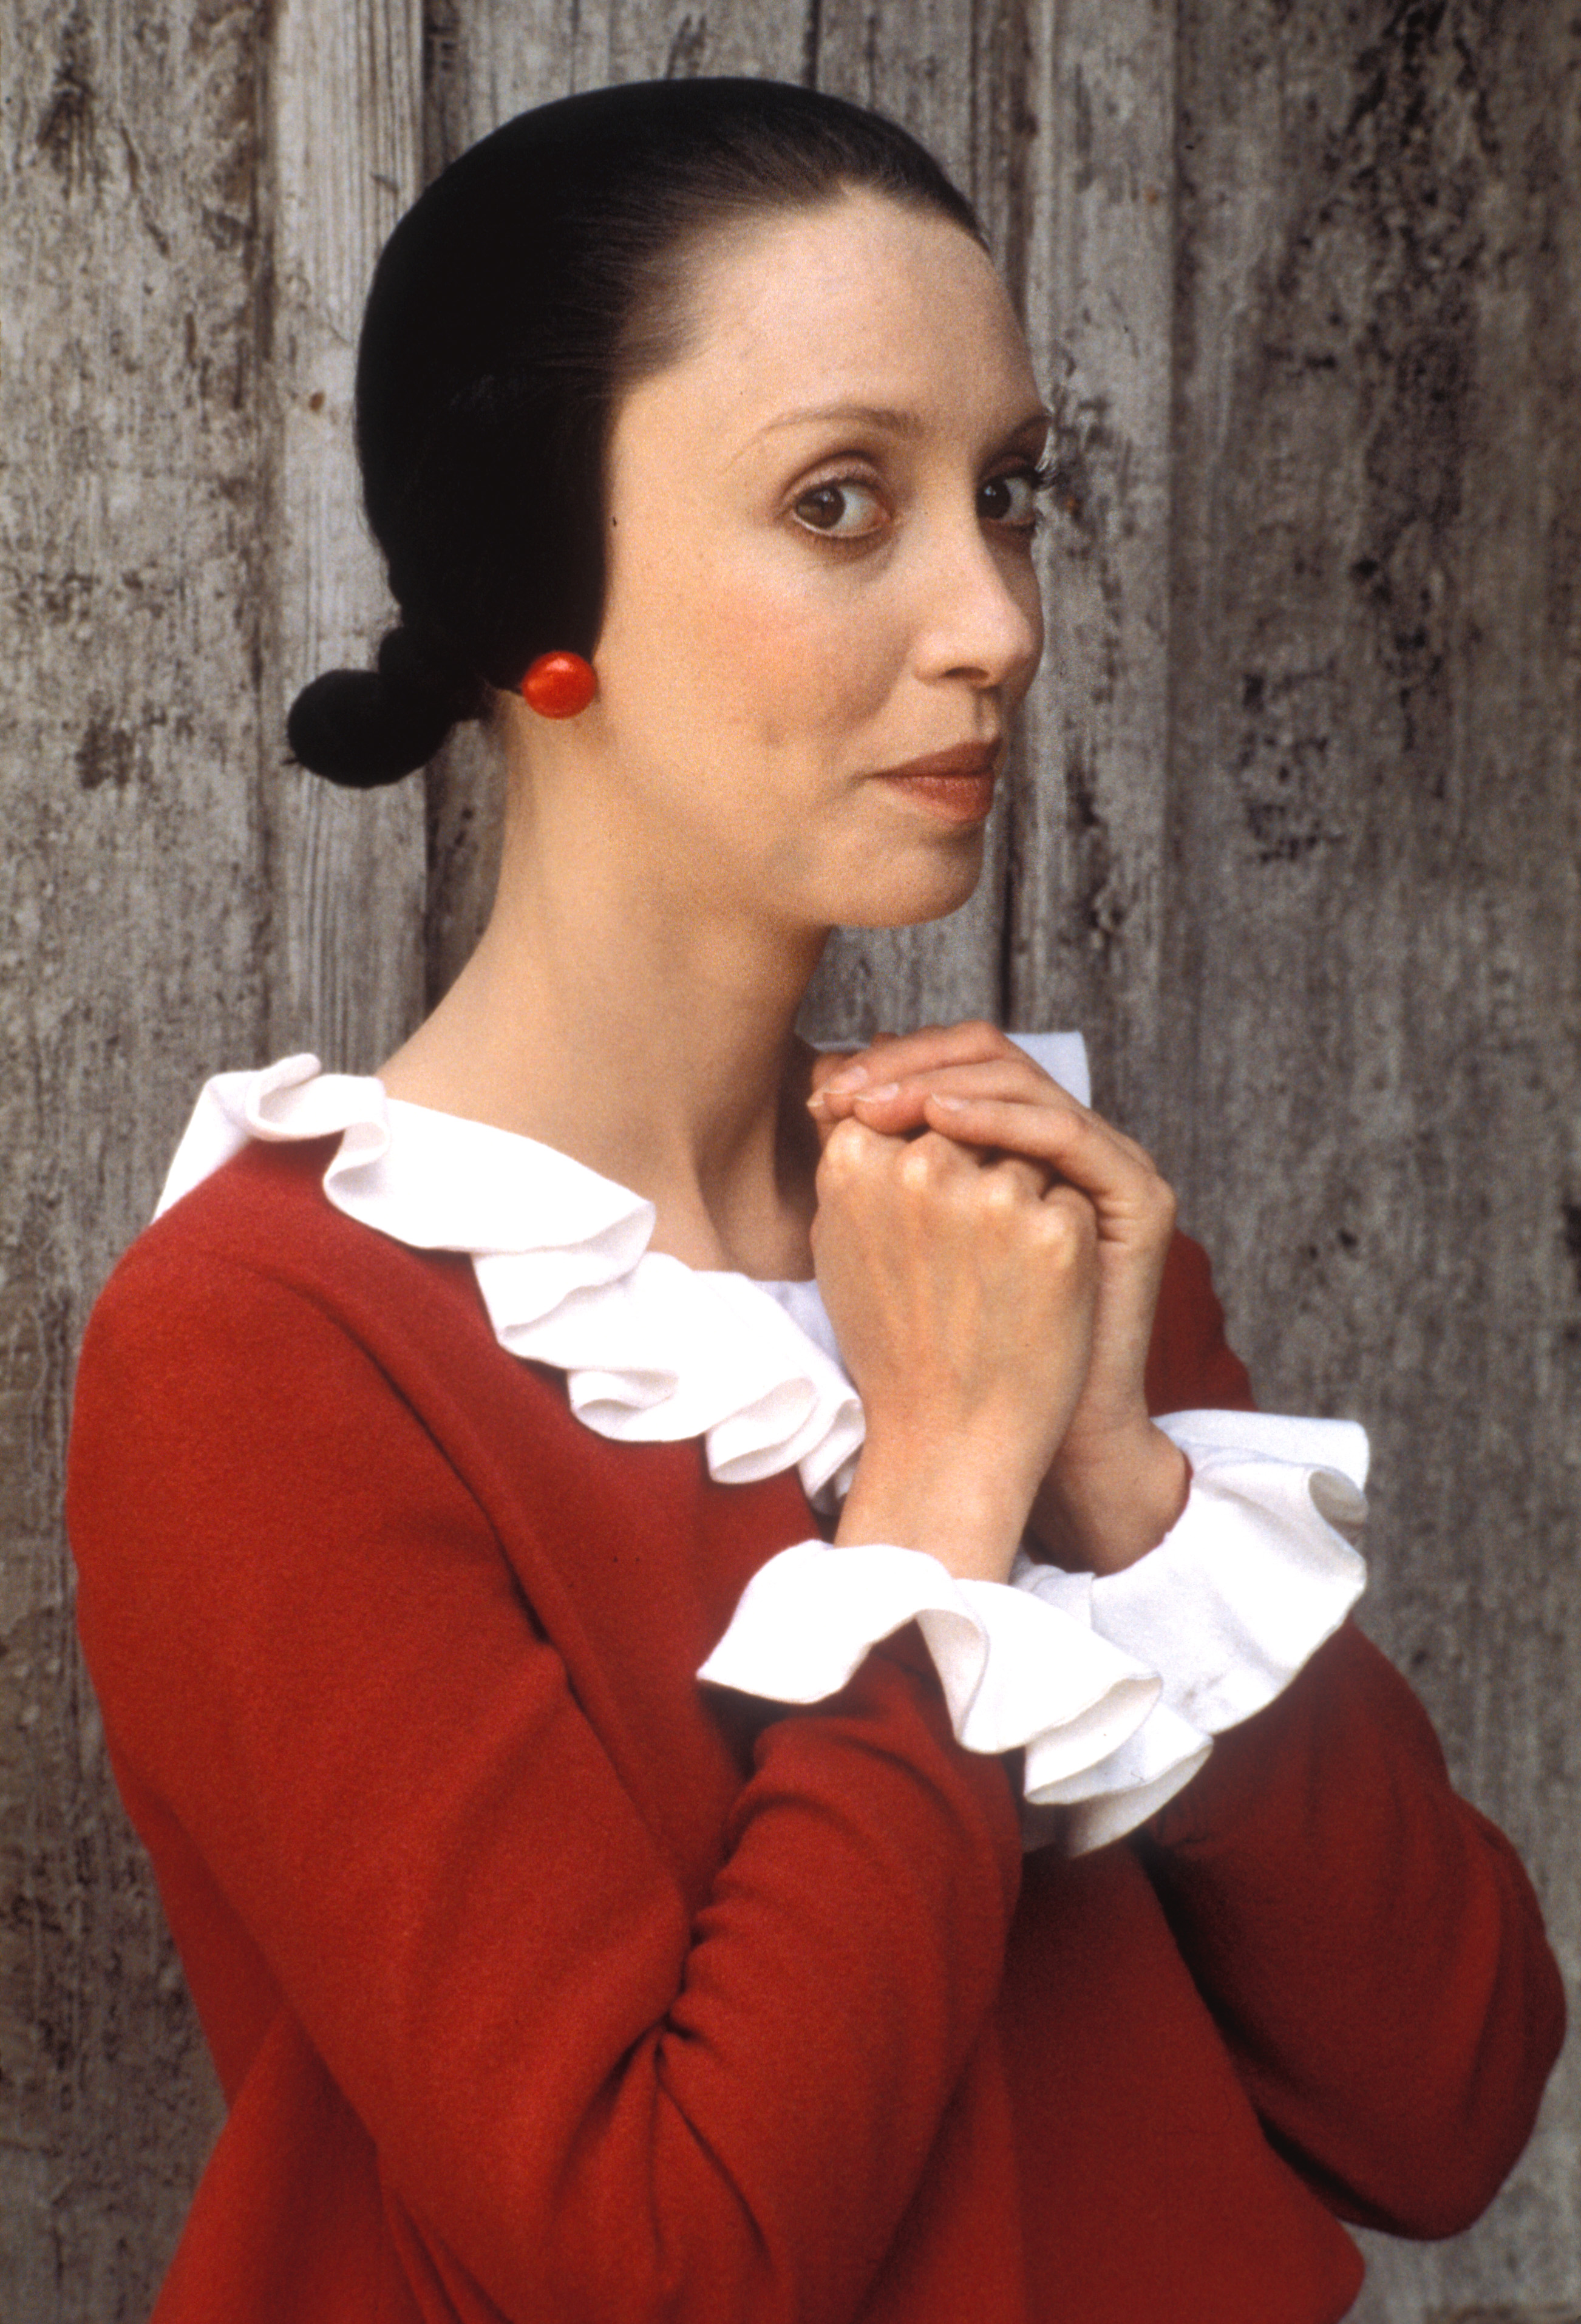 Shelley starring as Olive Oyl in 1980 film Popeye